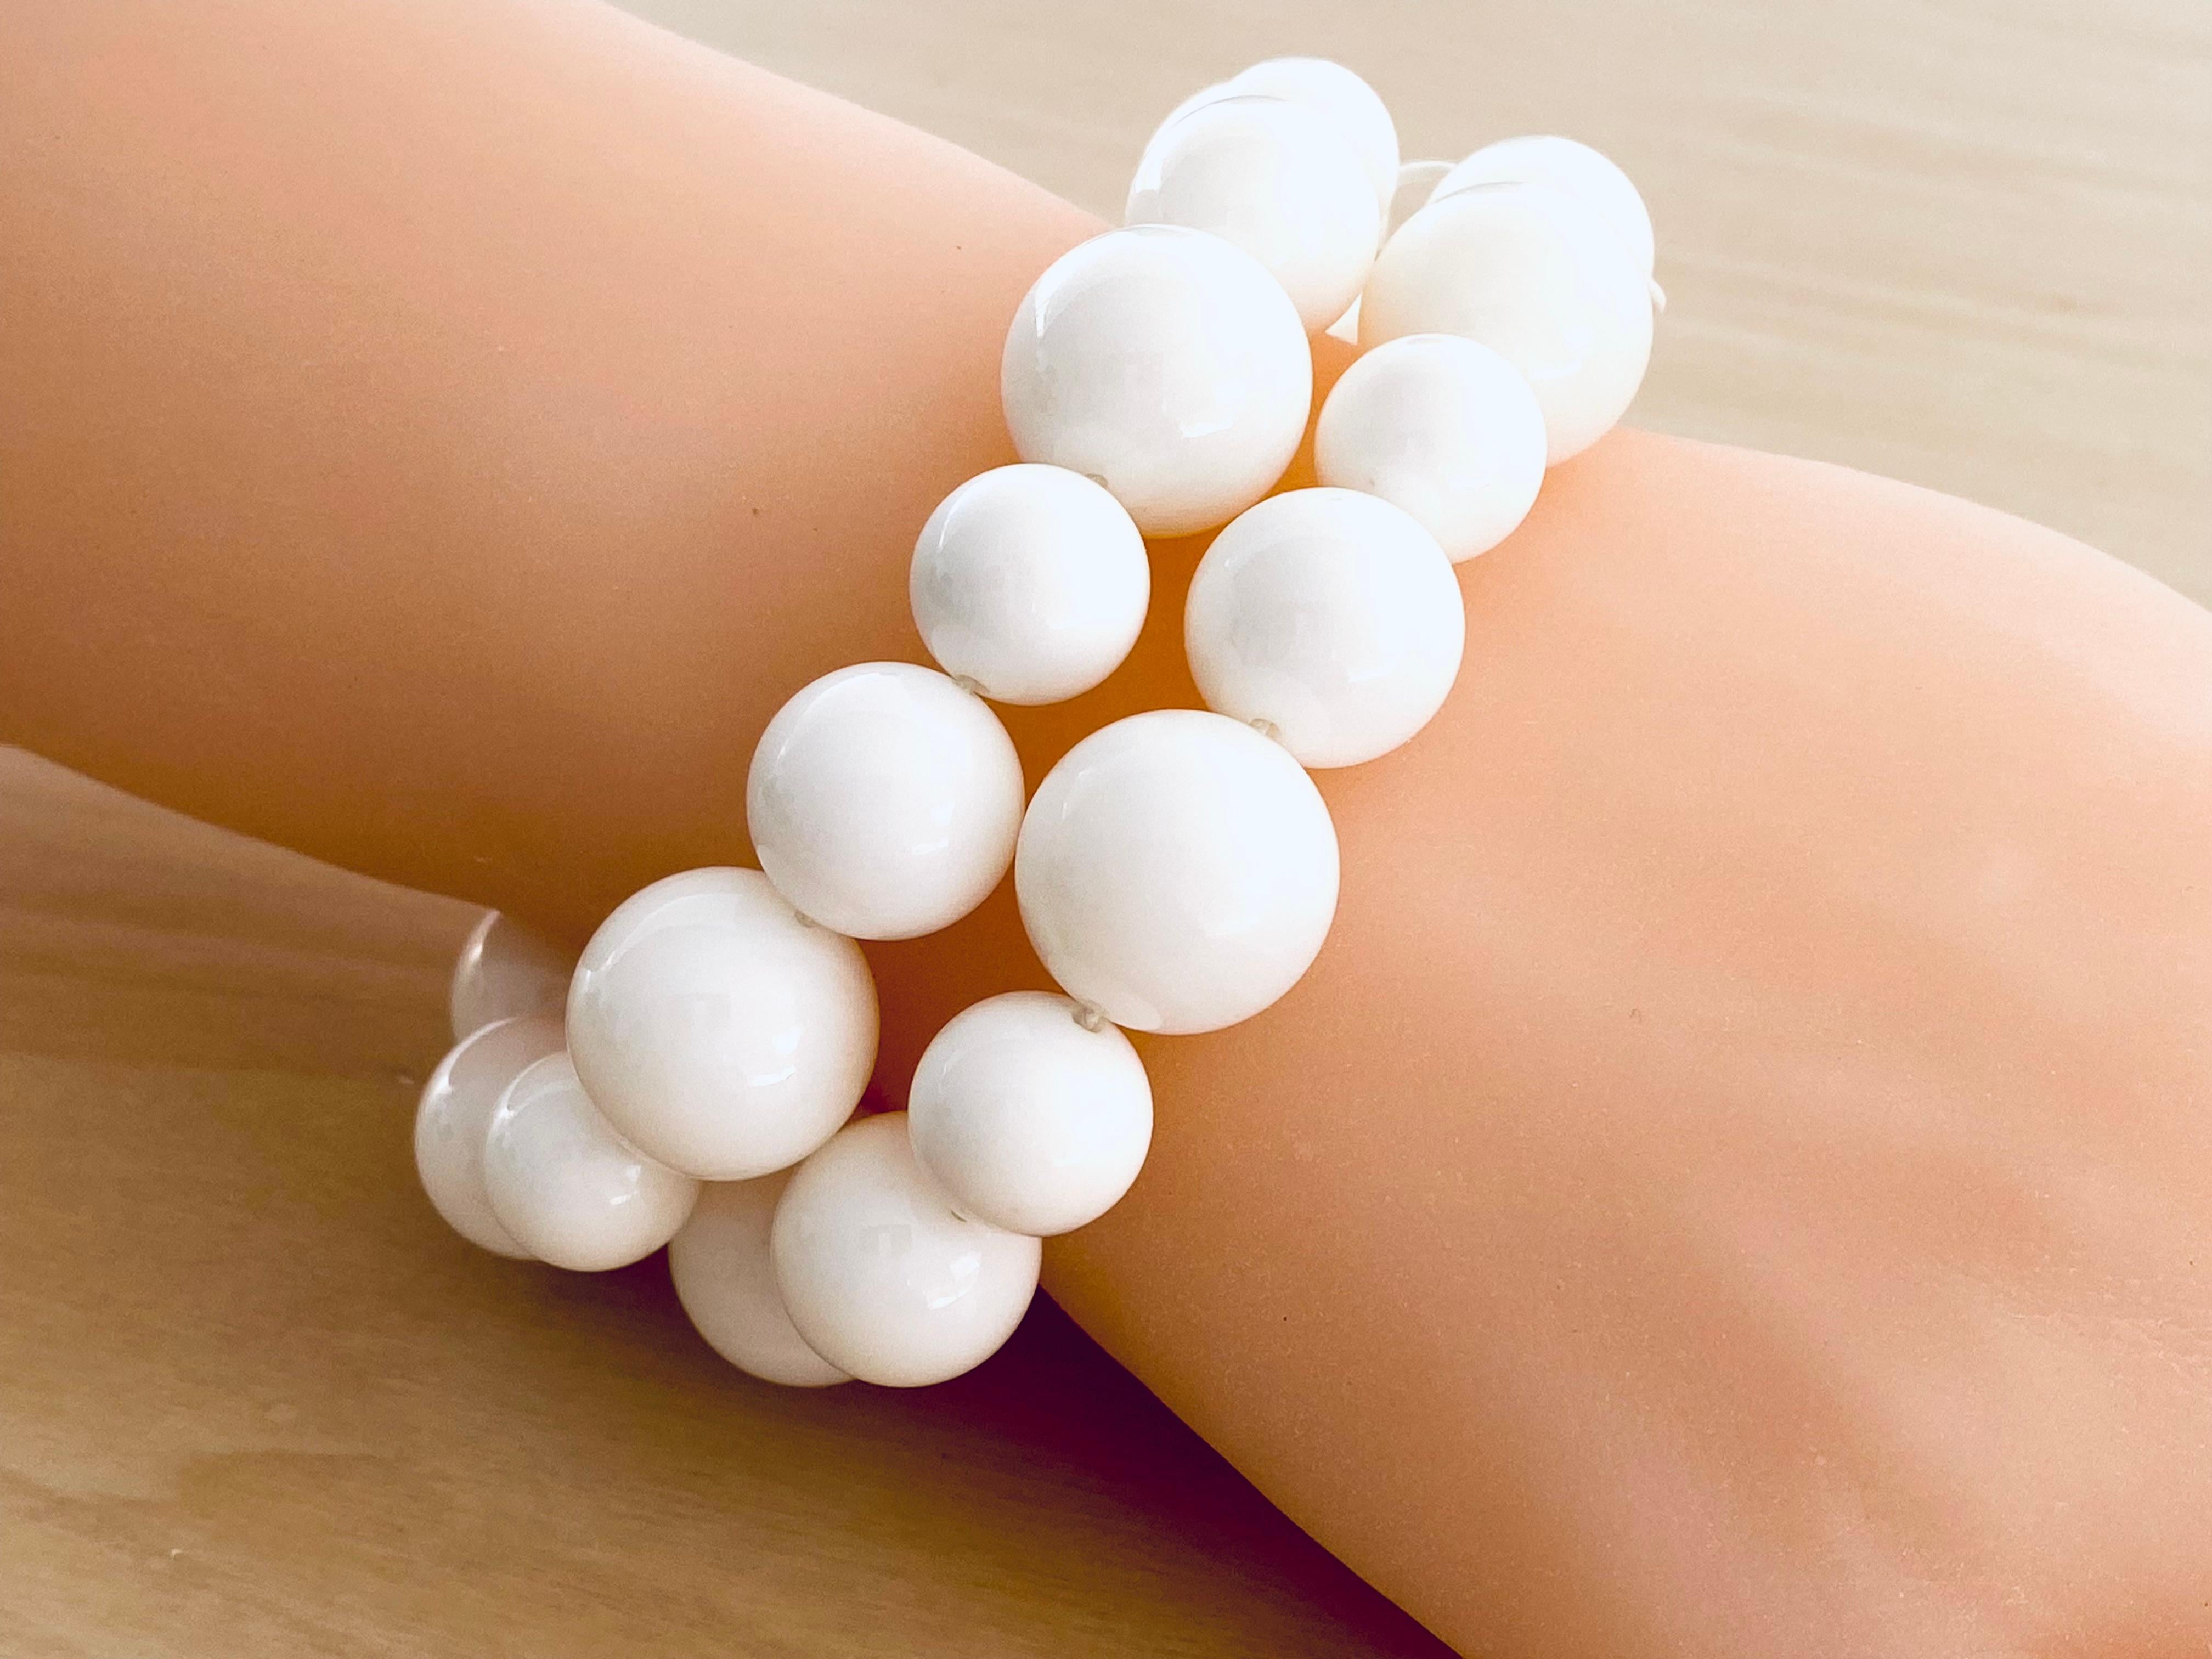 White Agate Bracelet 14mm Round Beads Bangle 
Pair matched bracelet